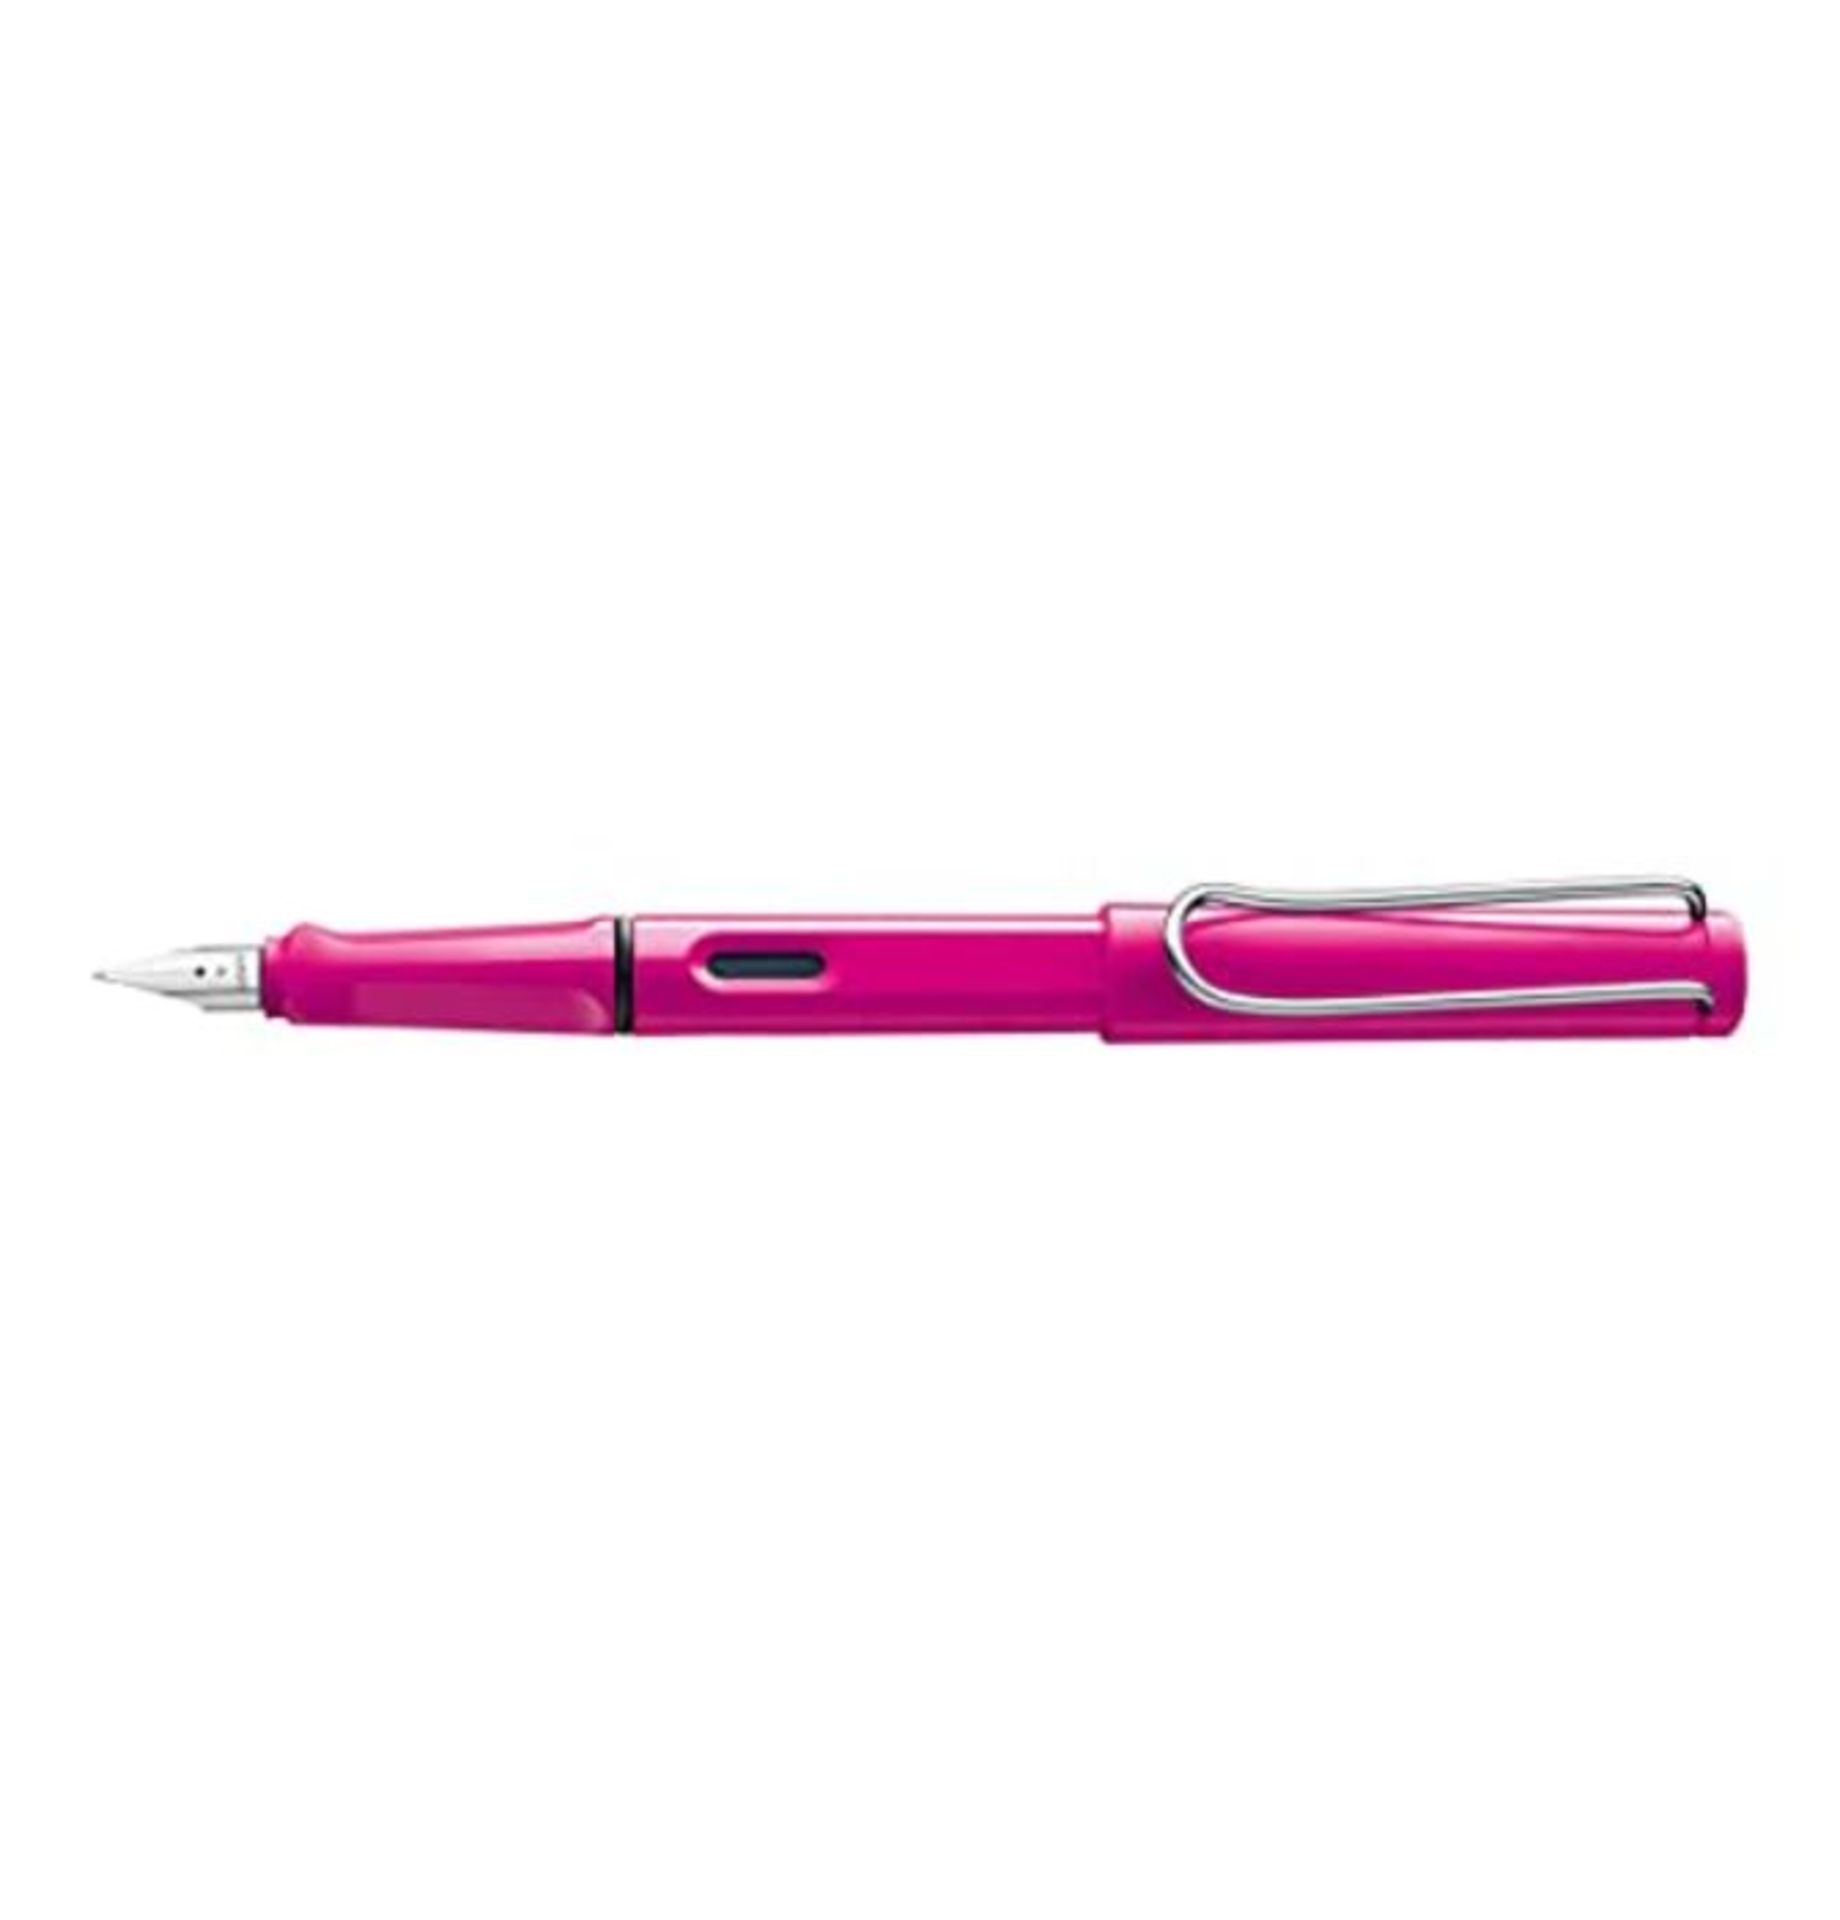 LAMY safari 013 Fountain Pen, Modern Fountain Pen in Pink with Ergonomic Grip and Time